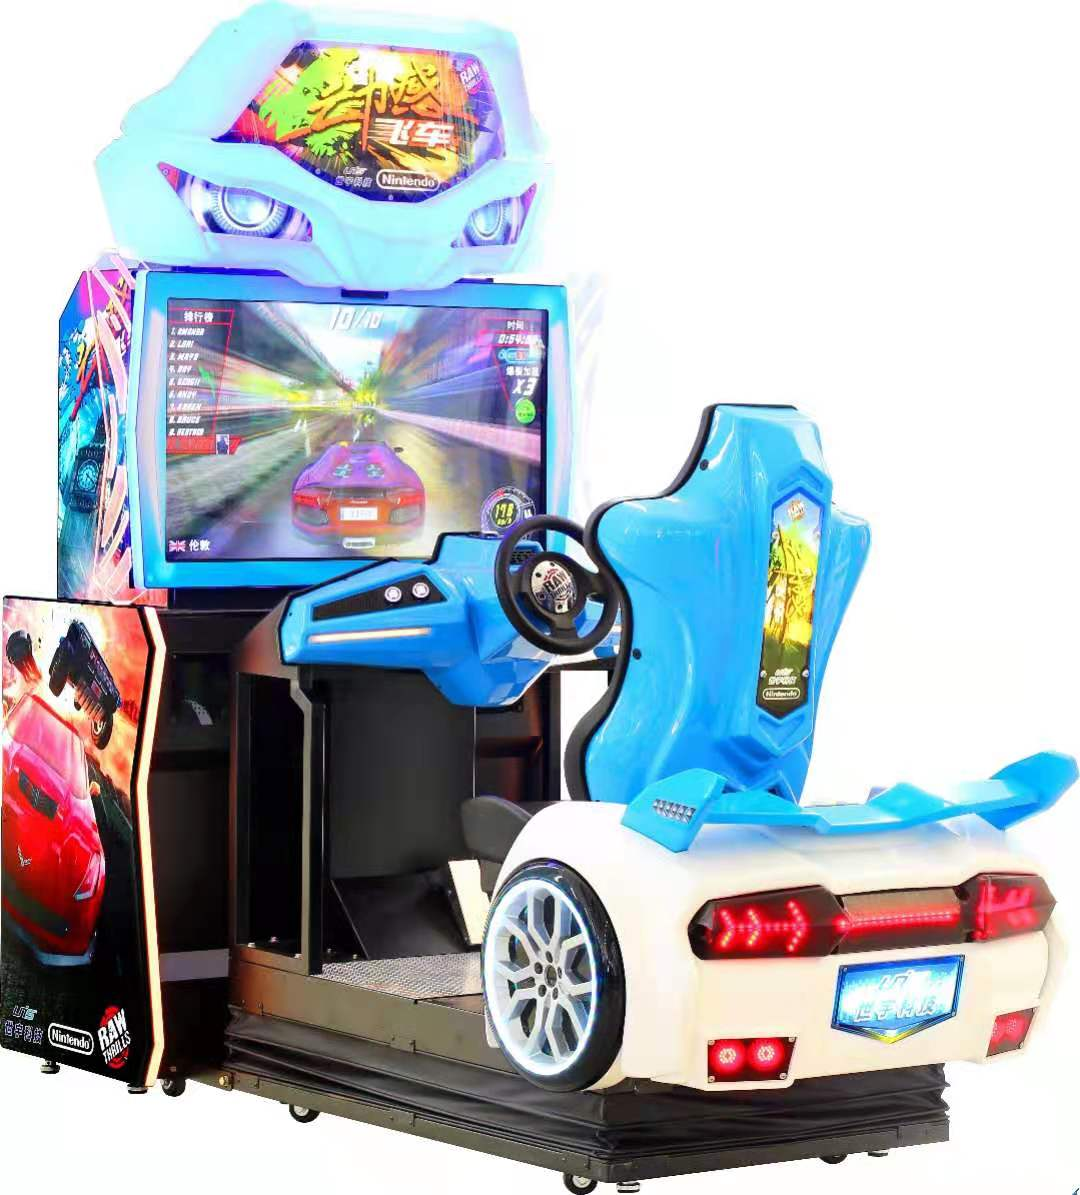 42 LCD dynamic Racing ll Simulator racing arcade game machin